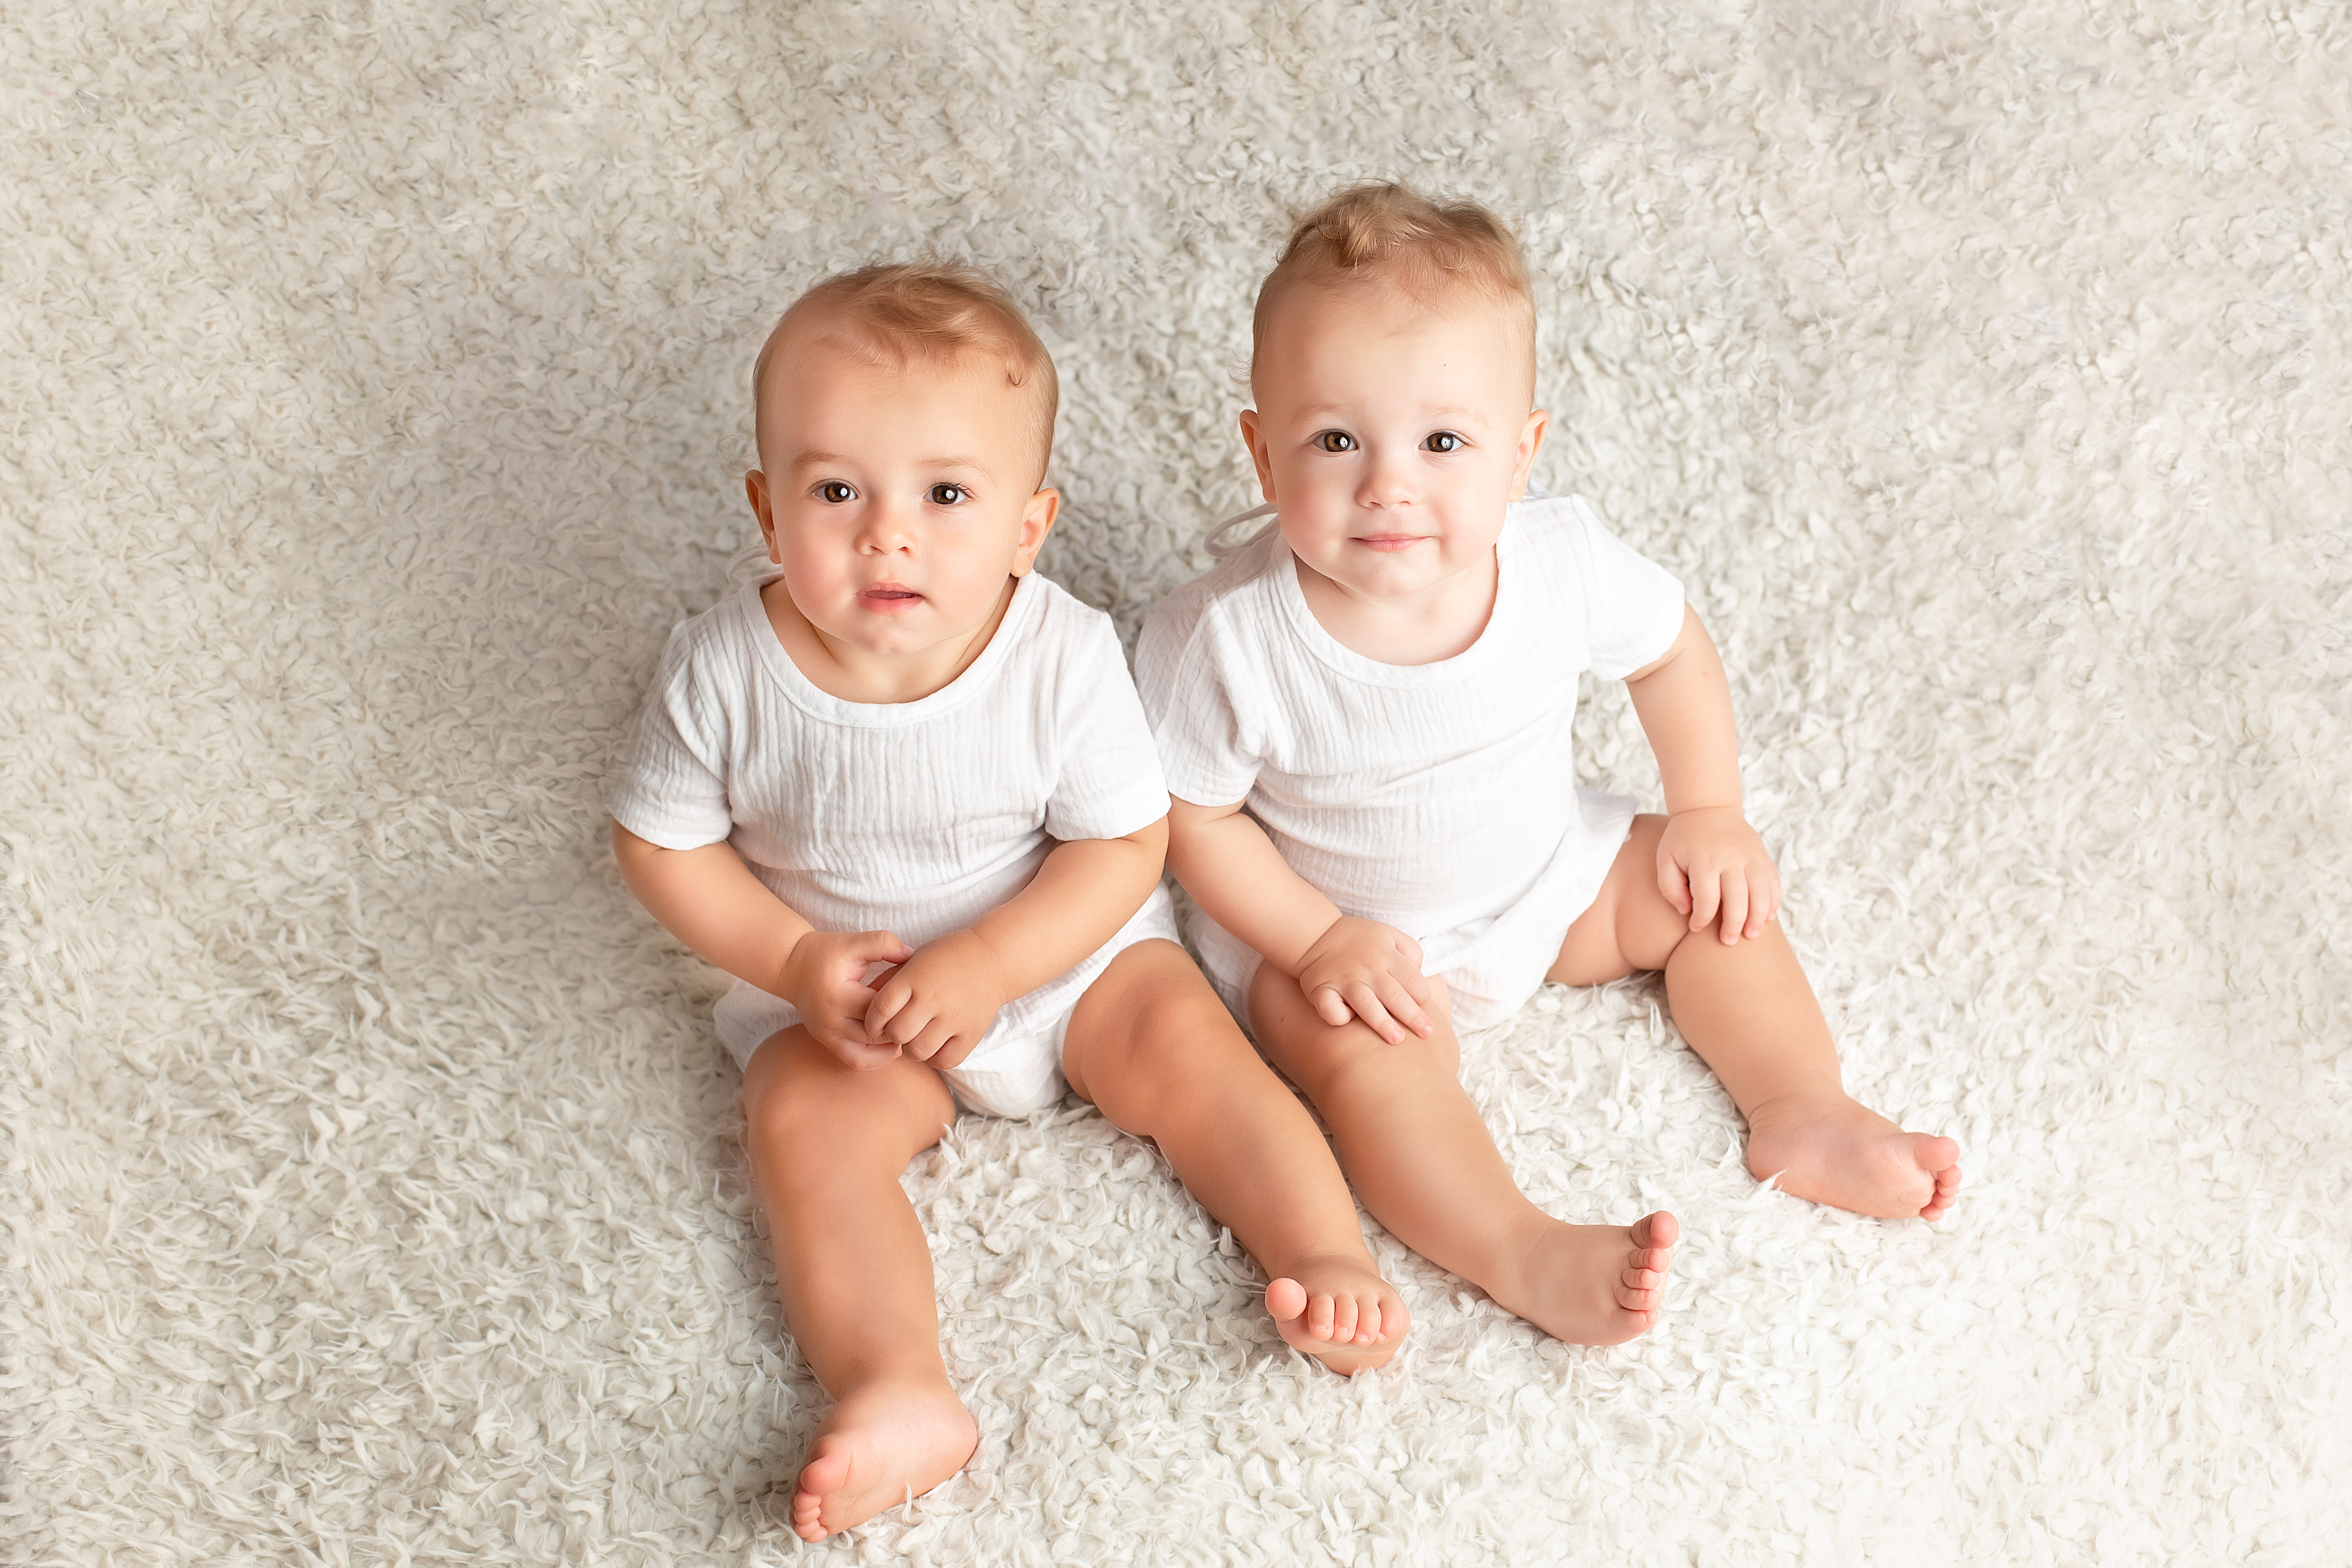 Twin babies | Source: Shutterstock